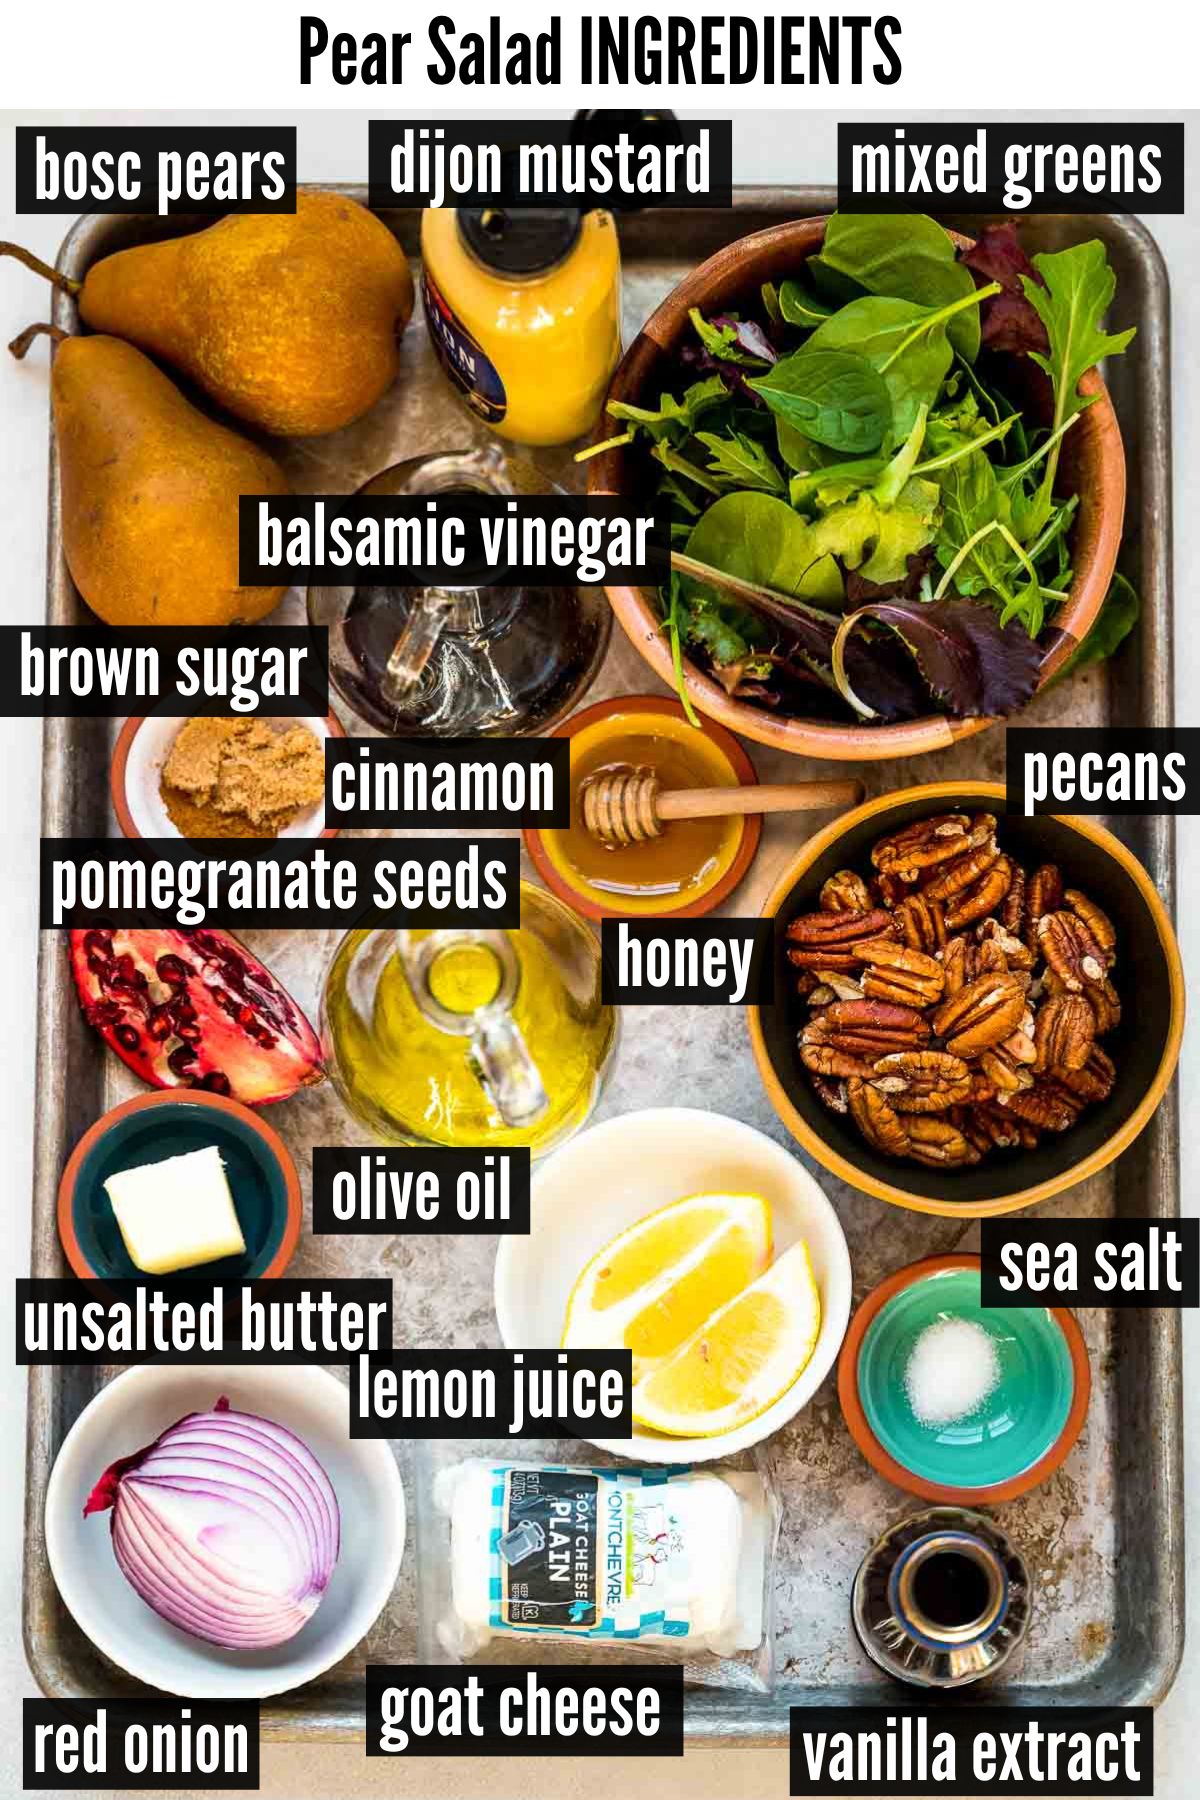 pear salad labelled ingredients.